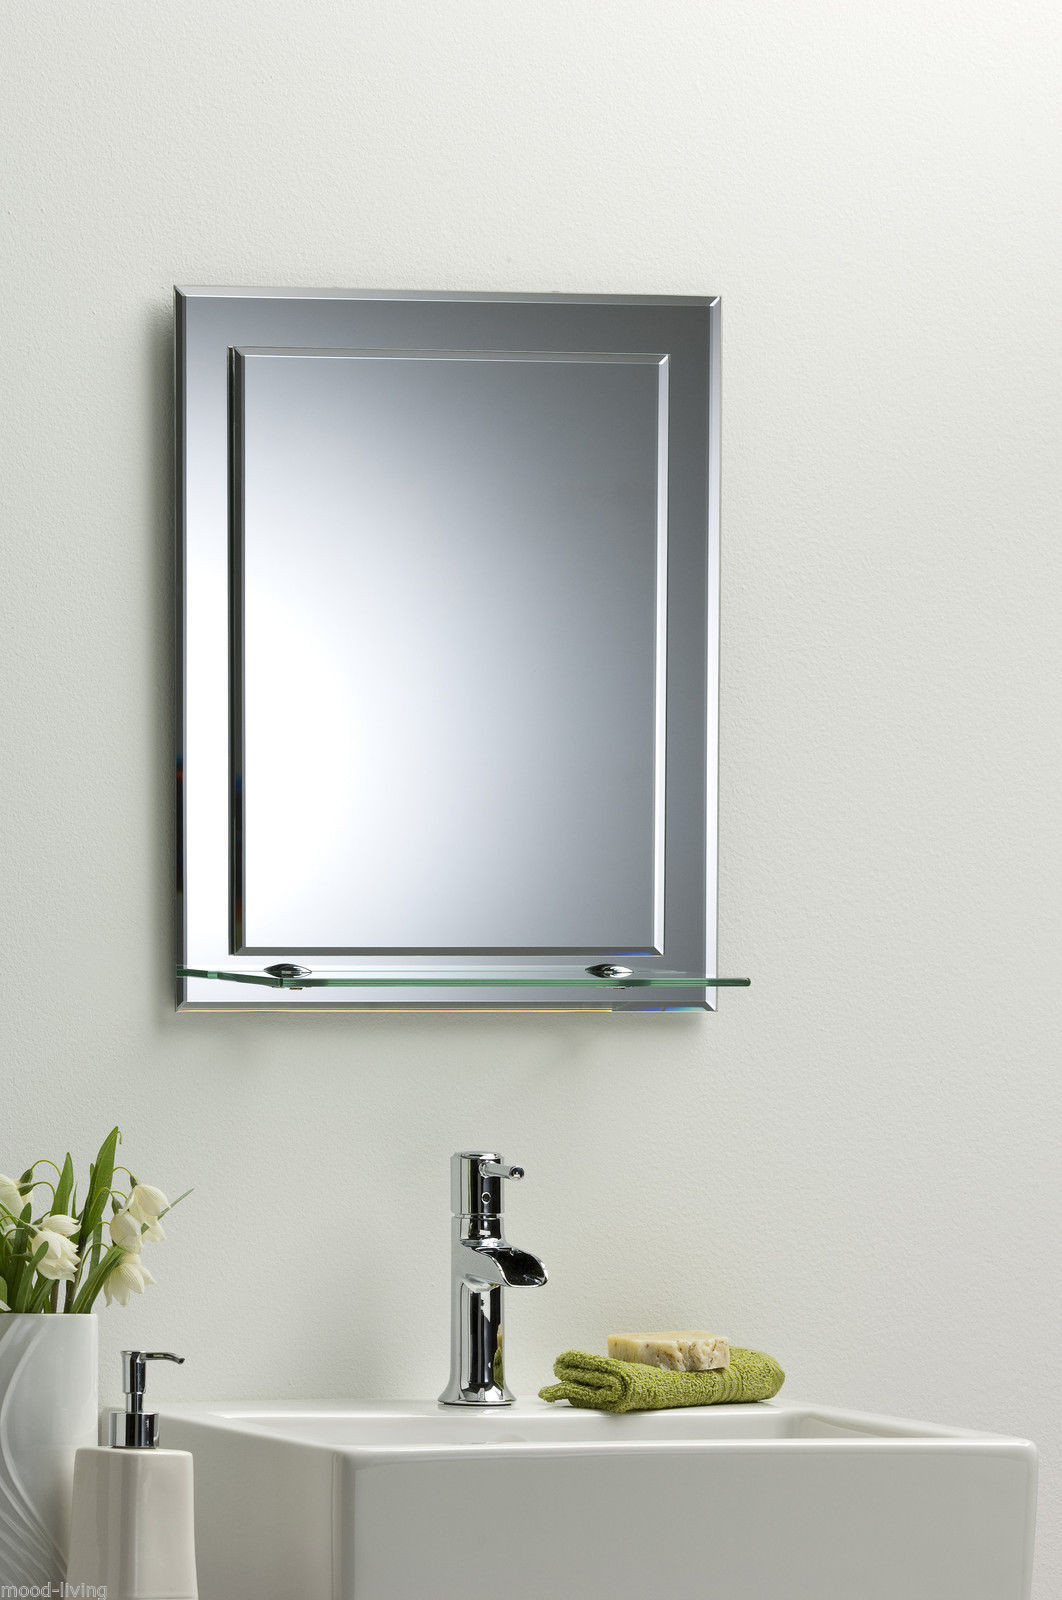 Bathroom Vanity Mirror With Shelf
 BATHROOM MIRROR ON MIRROR Elegant Rectangular WITH SHELF